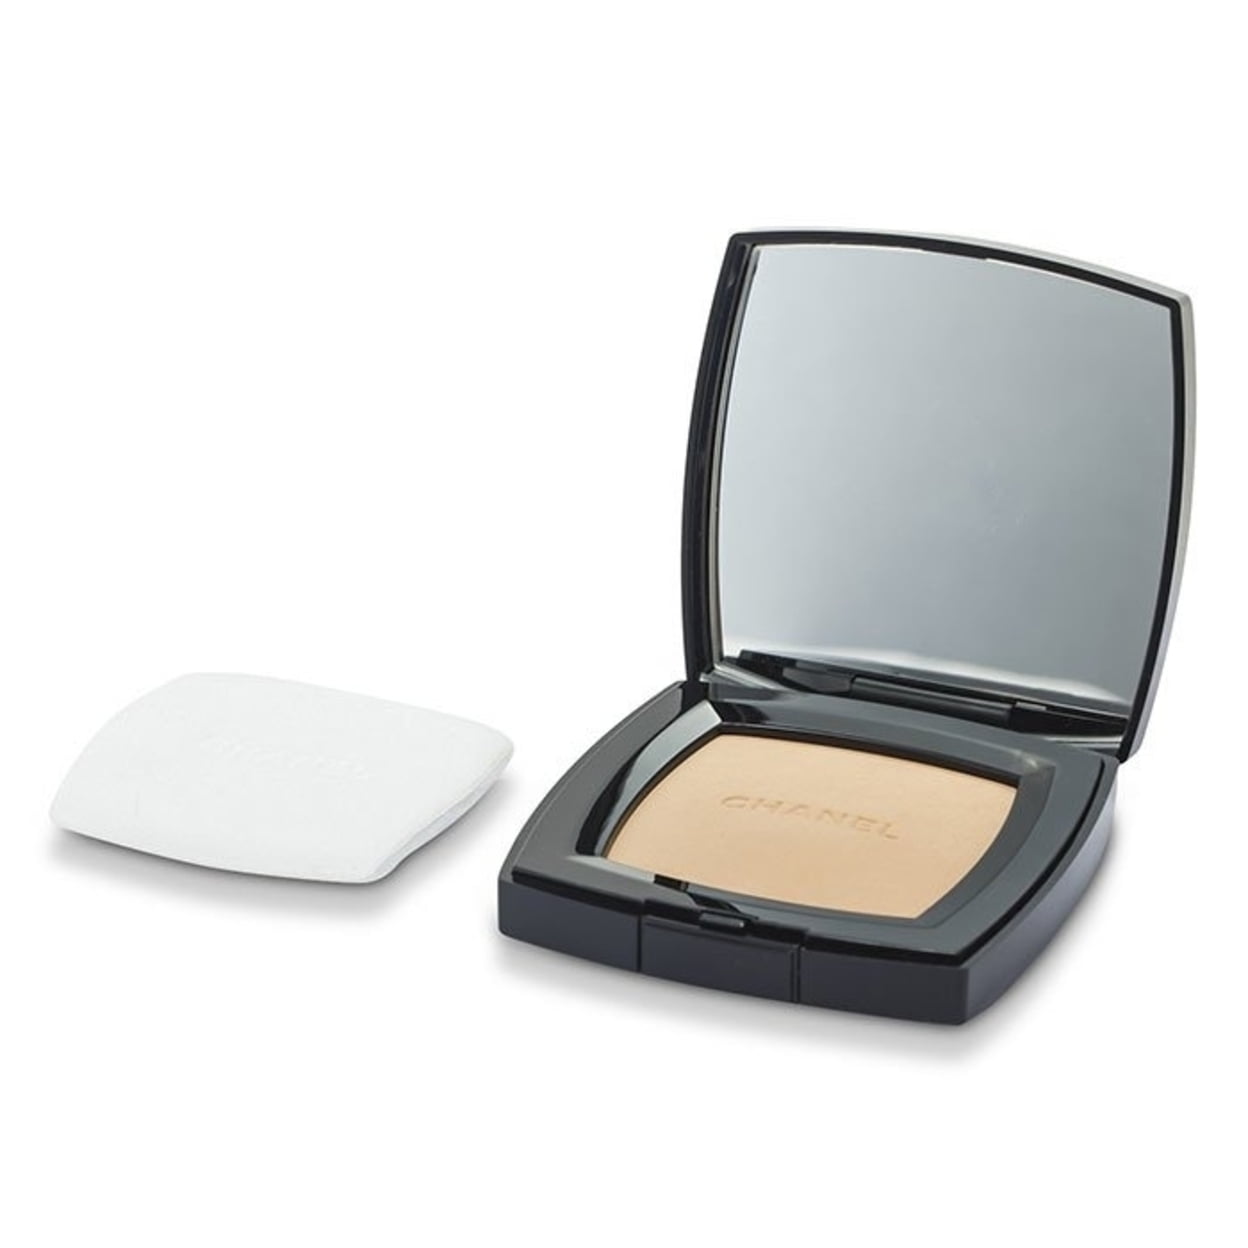 Chanel Poudre Universelle Compacte - # 40 Dore Translucent 3 0.53 oz Powder